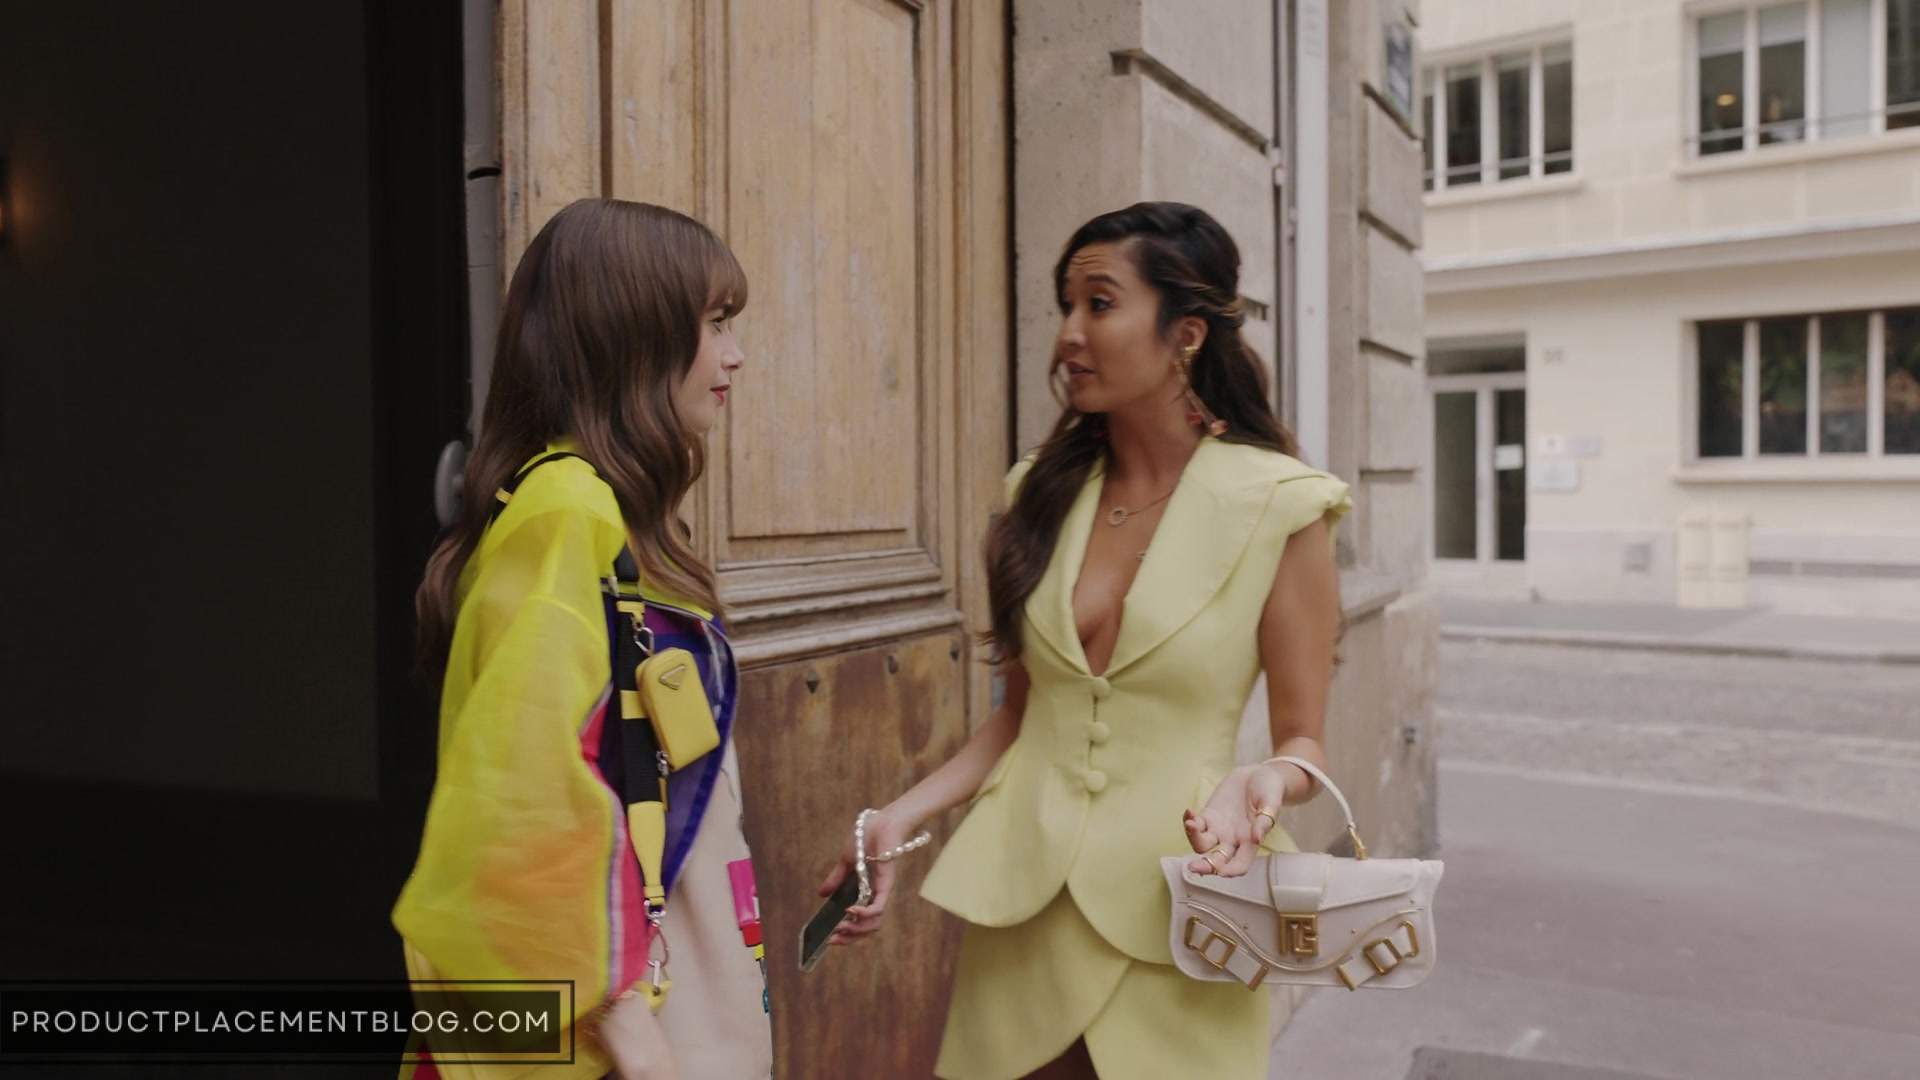 Roger Vivier Rv Fringe Bag Mini worn by Mindy Chen (Ashley Park) as seen in  Emily in Paris (S02E07)